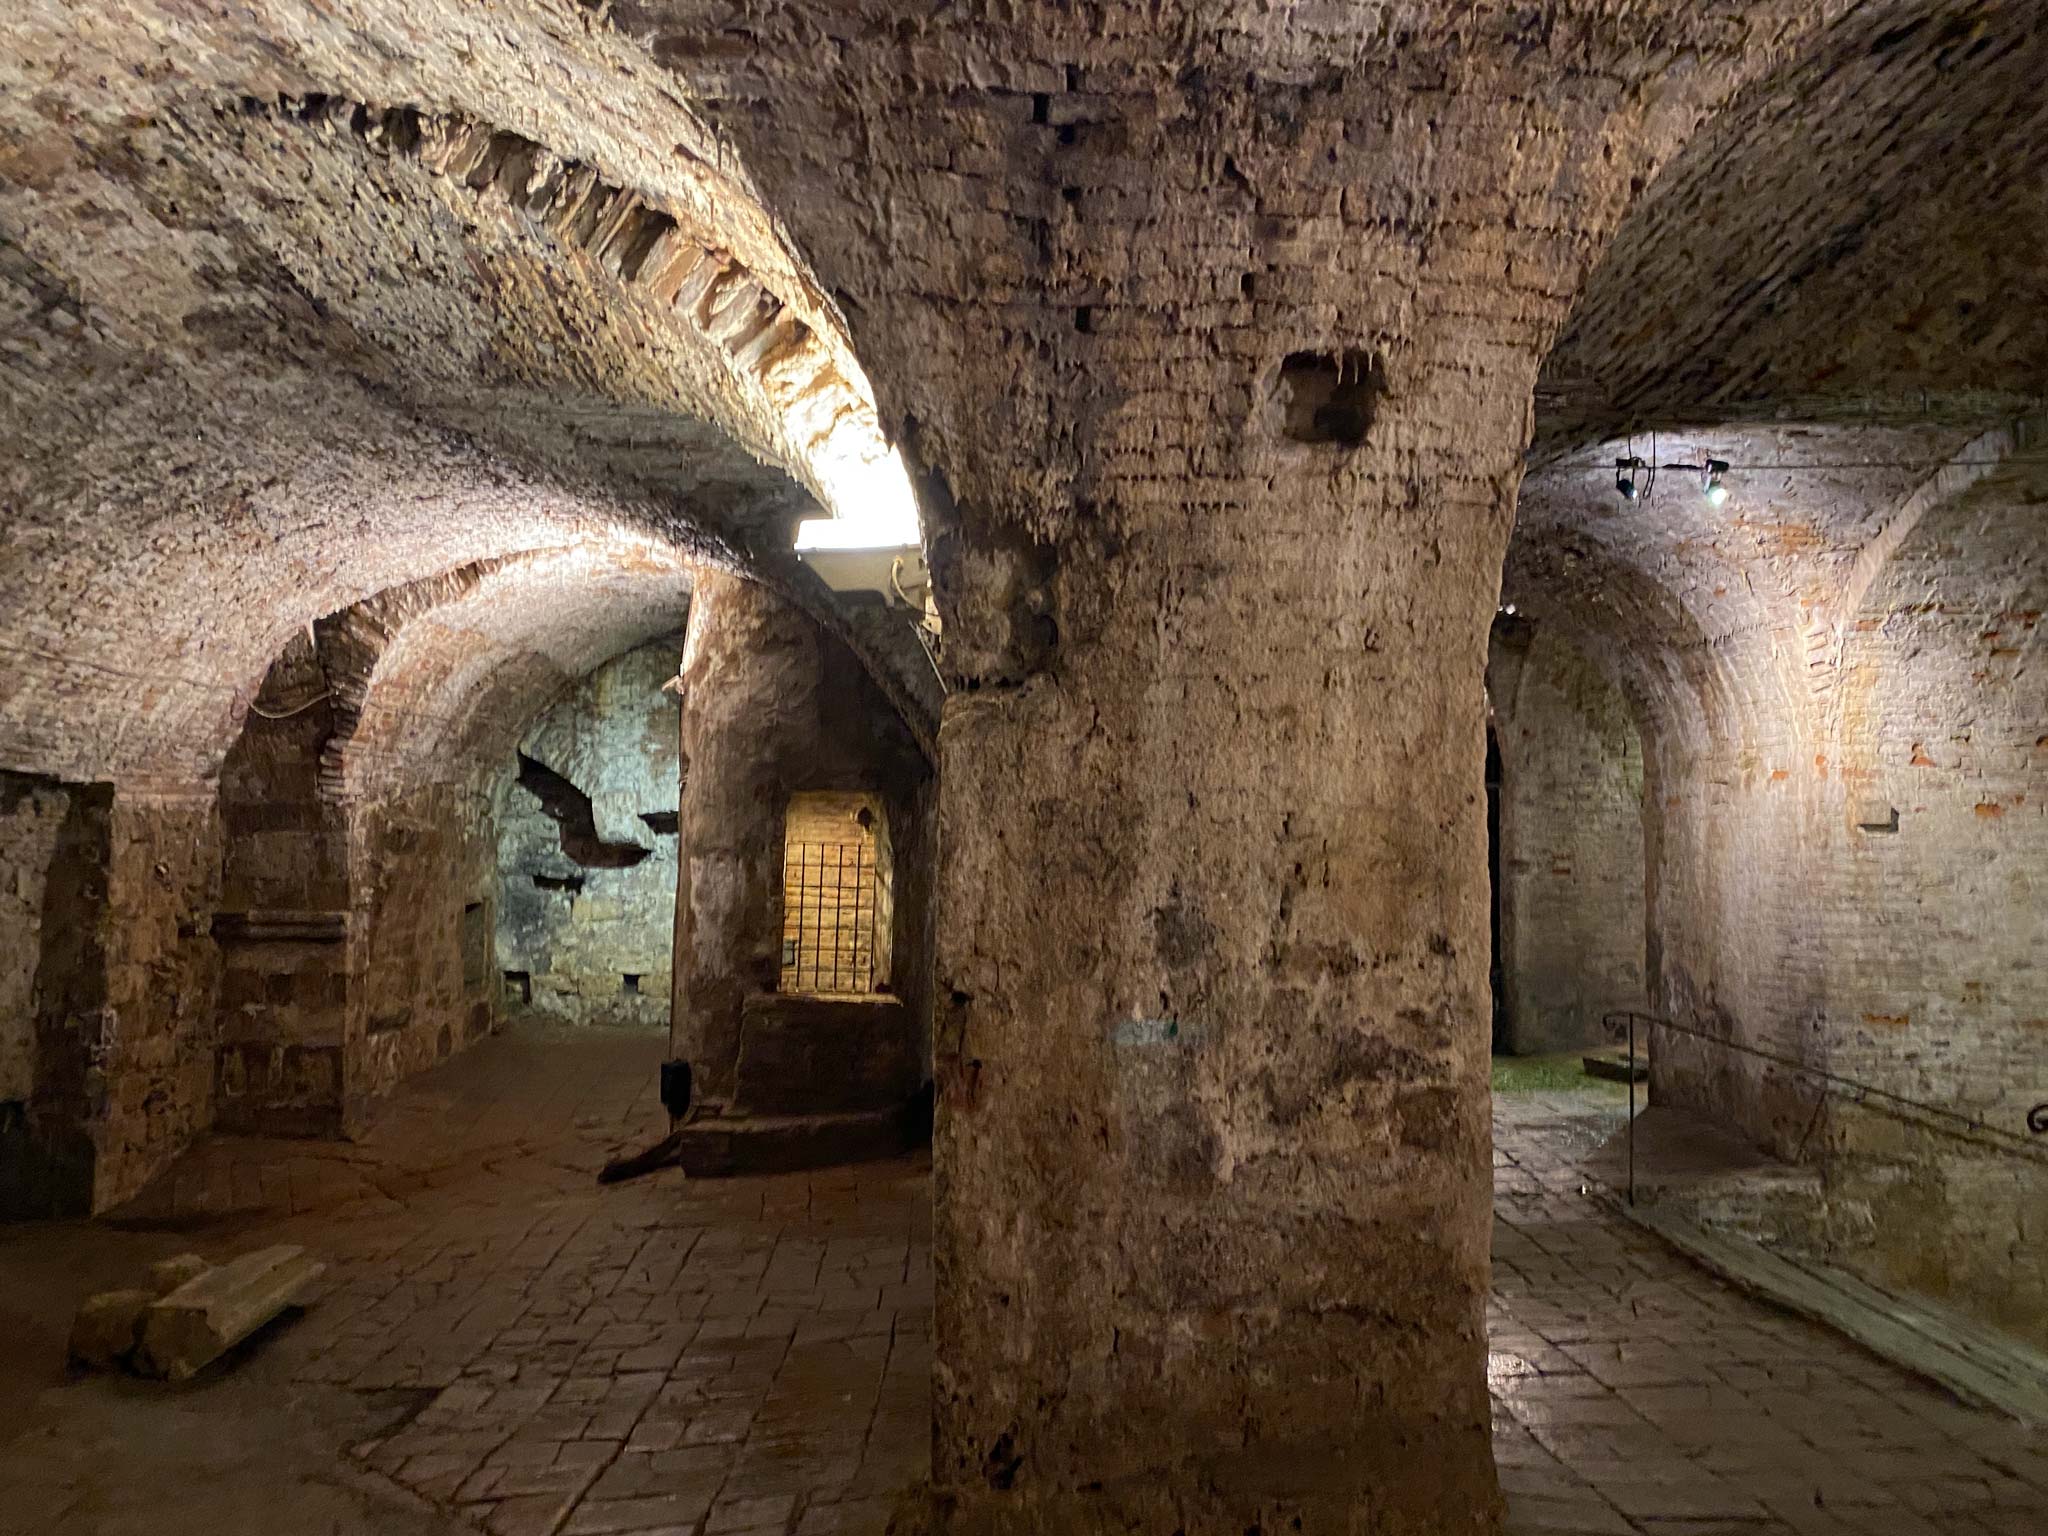 Exploring Rieti Underground, an ancient town near Rome